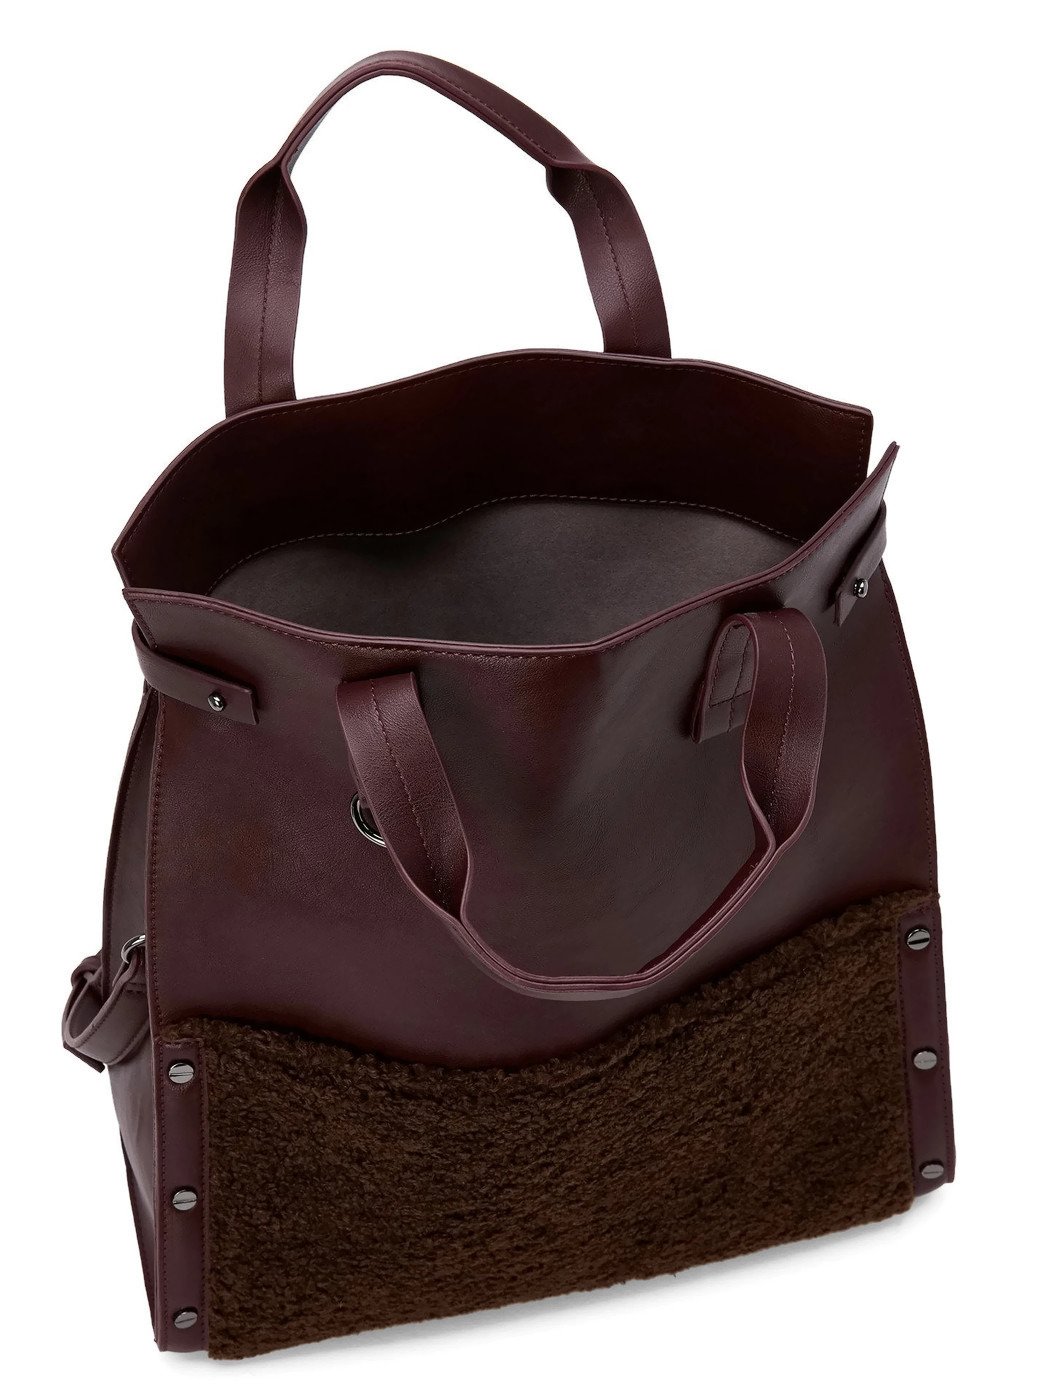 Danielle Nicole Womens Minx Faux Leather Colorblock Tote Handbag Purple Large